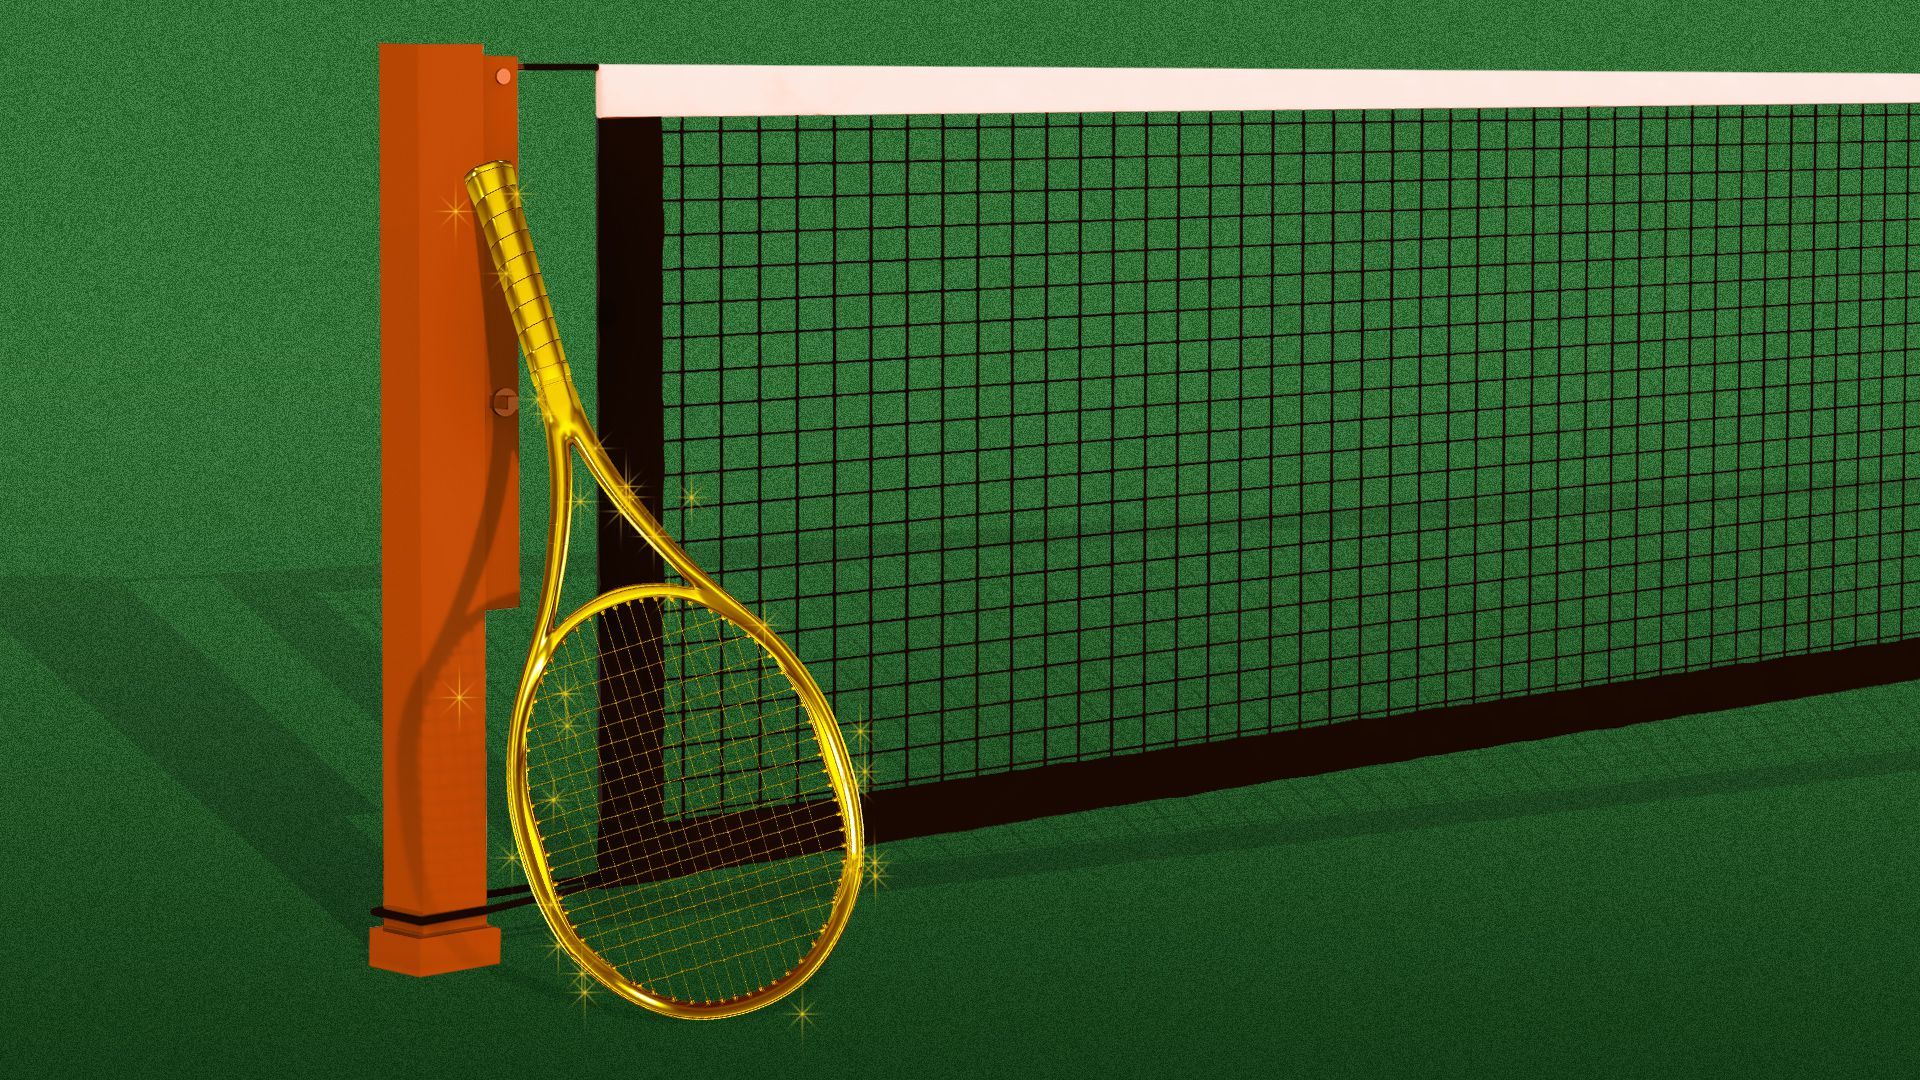 Illustration of a sparkling golden tennis racket leaned against a tennis net. 